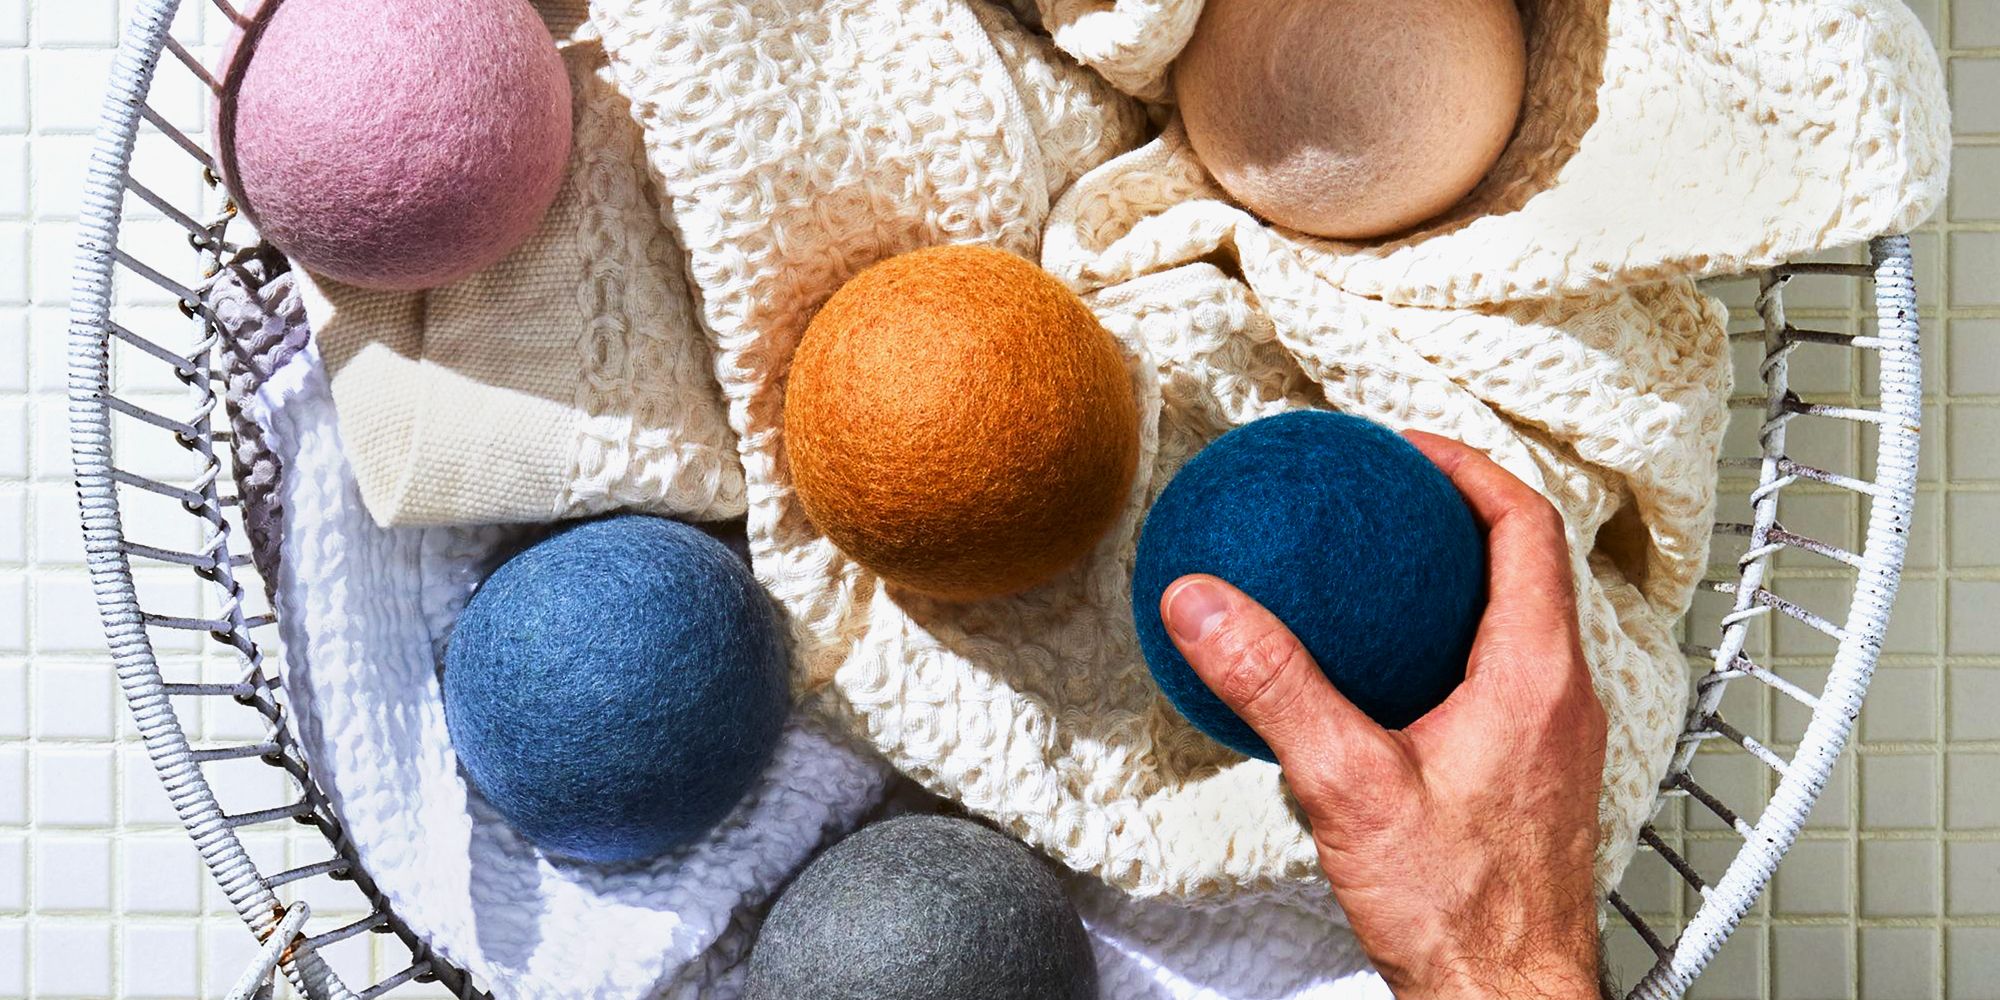 wool balls instead of dryer sheets